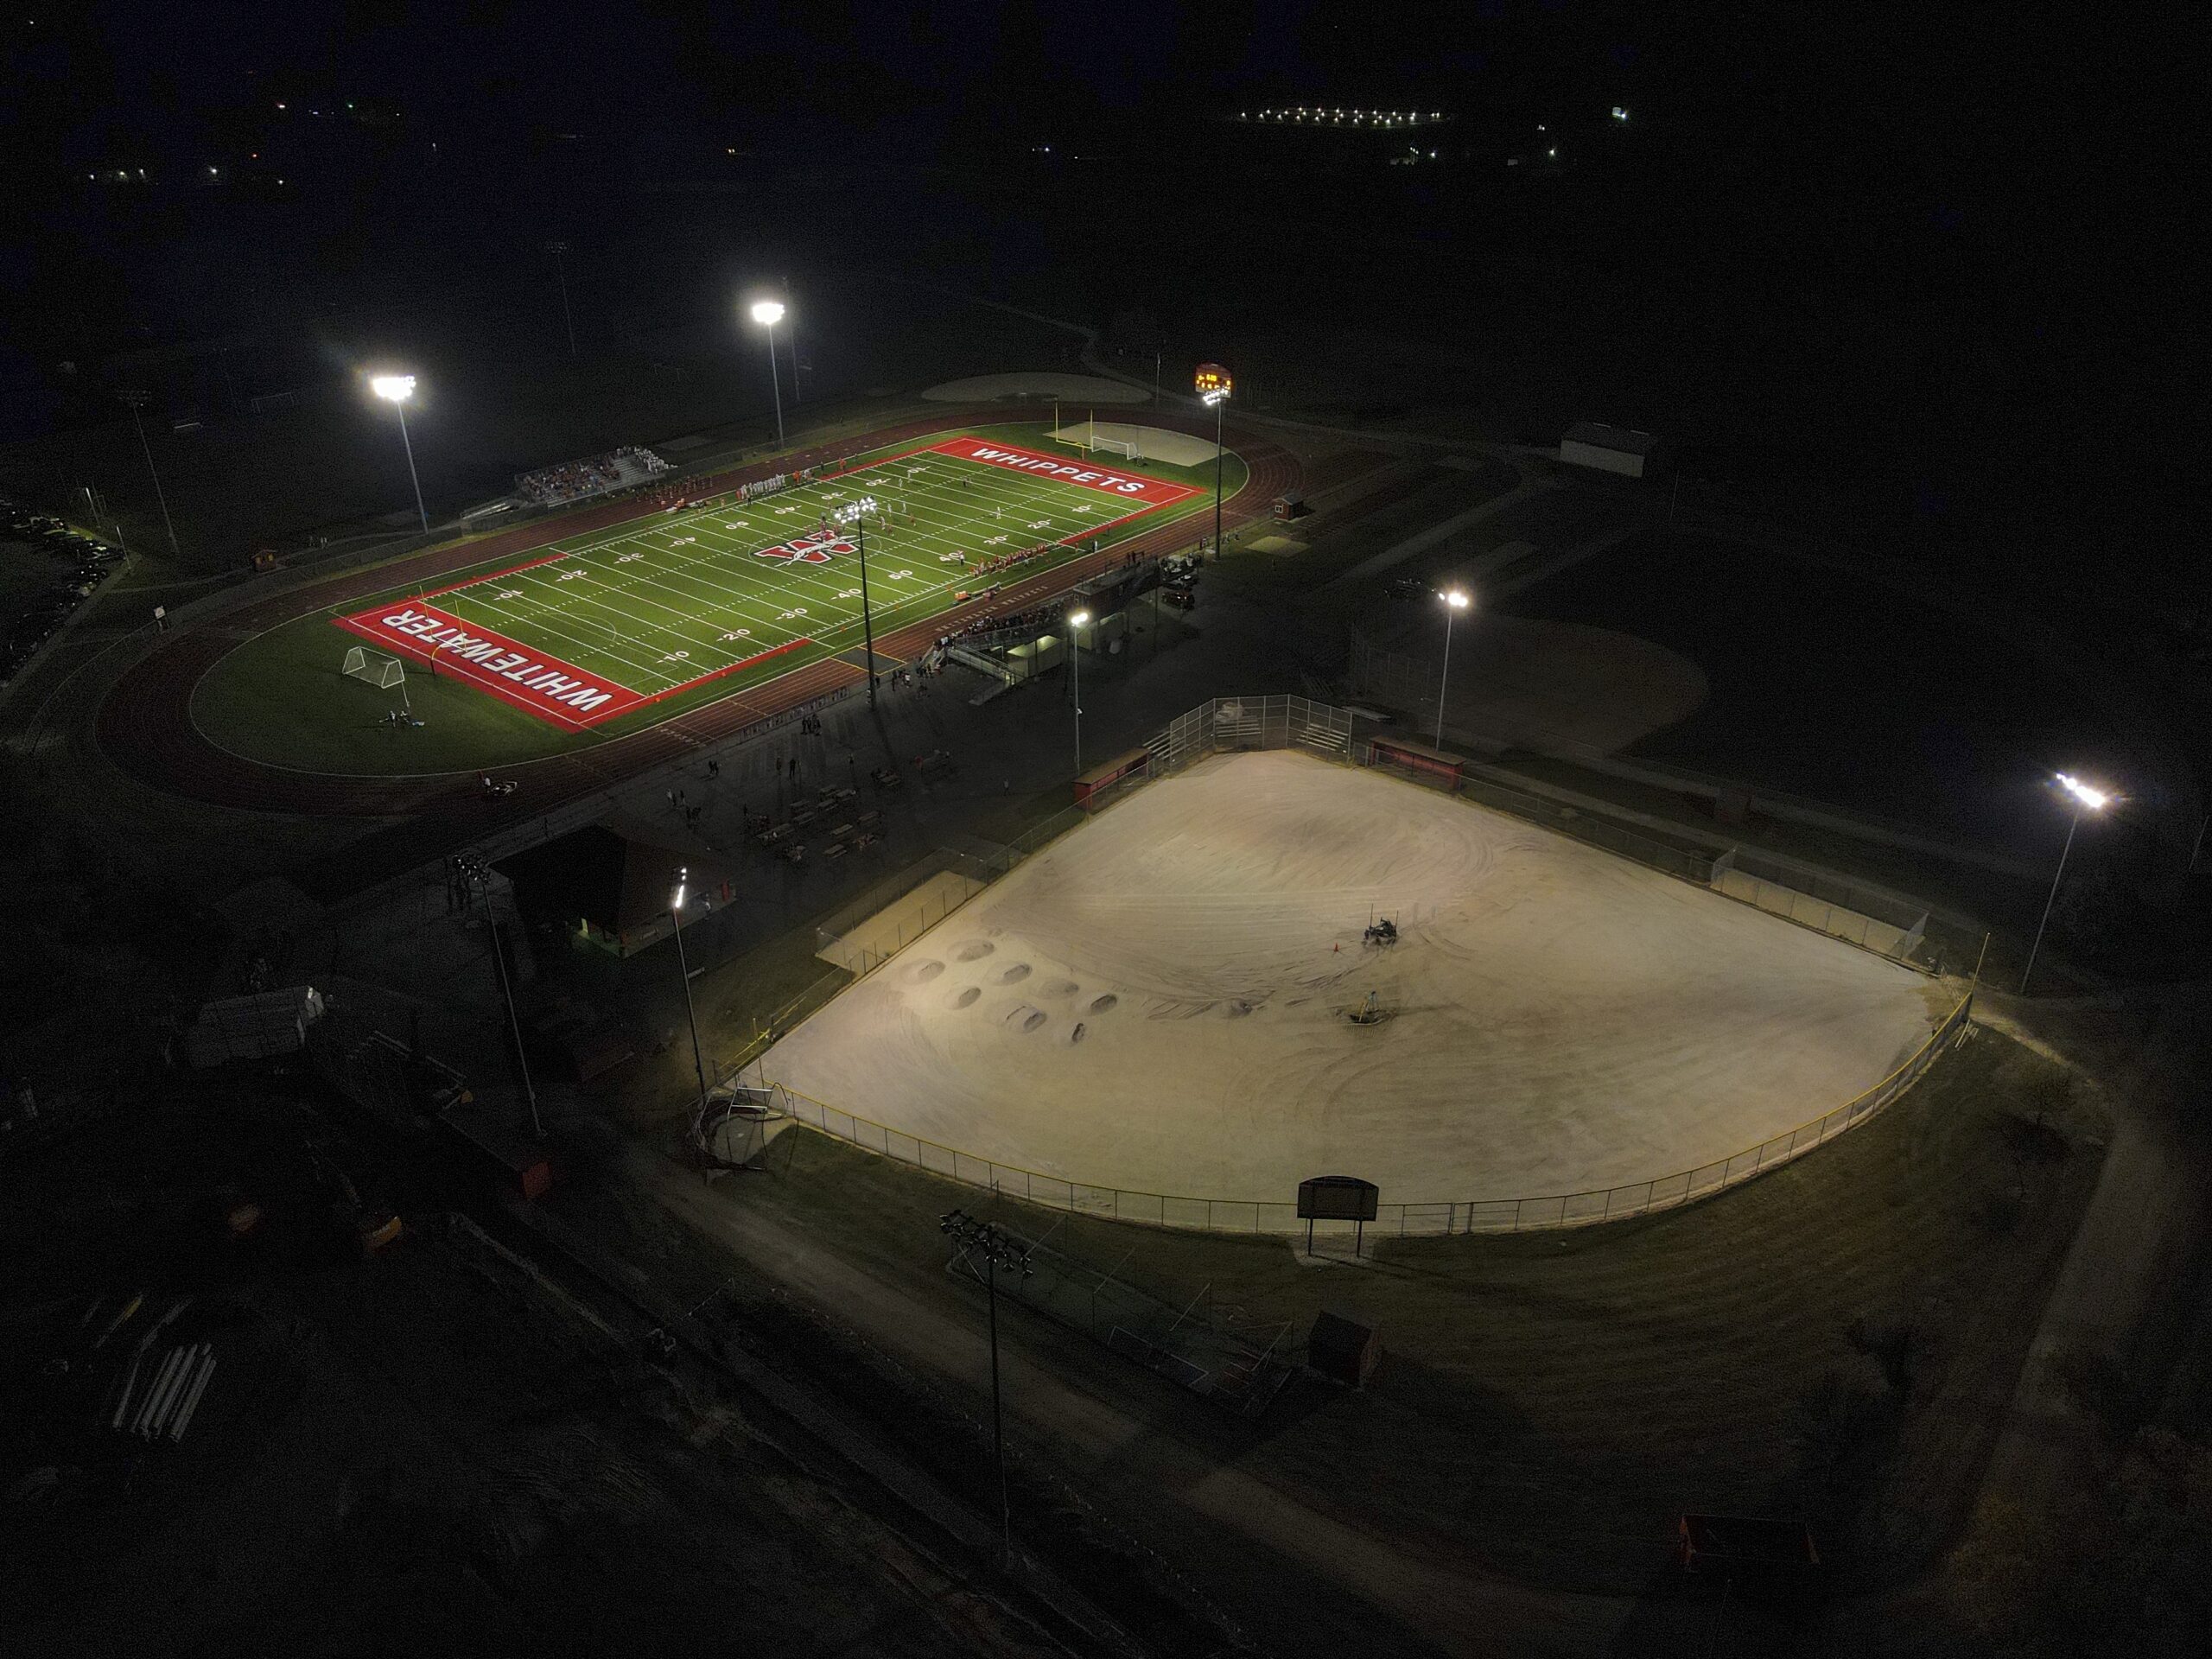 A football field and baseball diamond